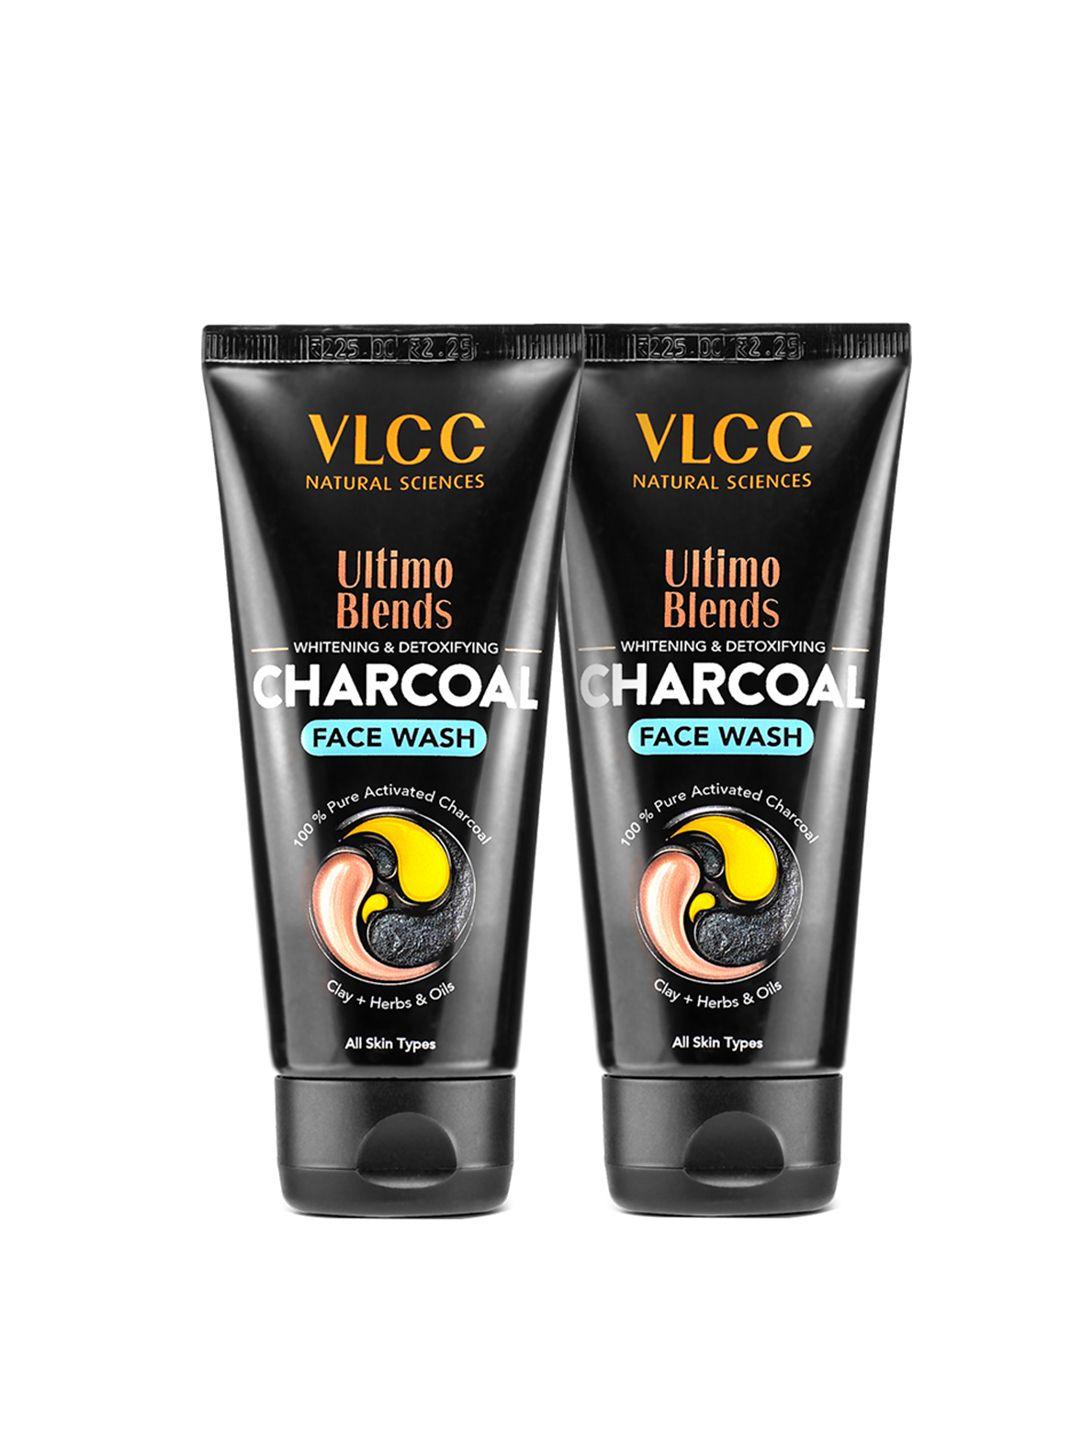 vlcc set of 2 ultimo blends whitening & detoxifying charcoal face wash - 100 ml each